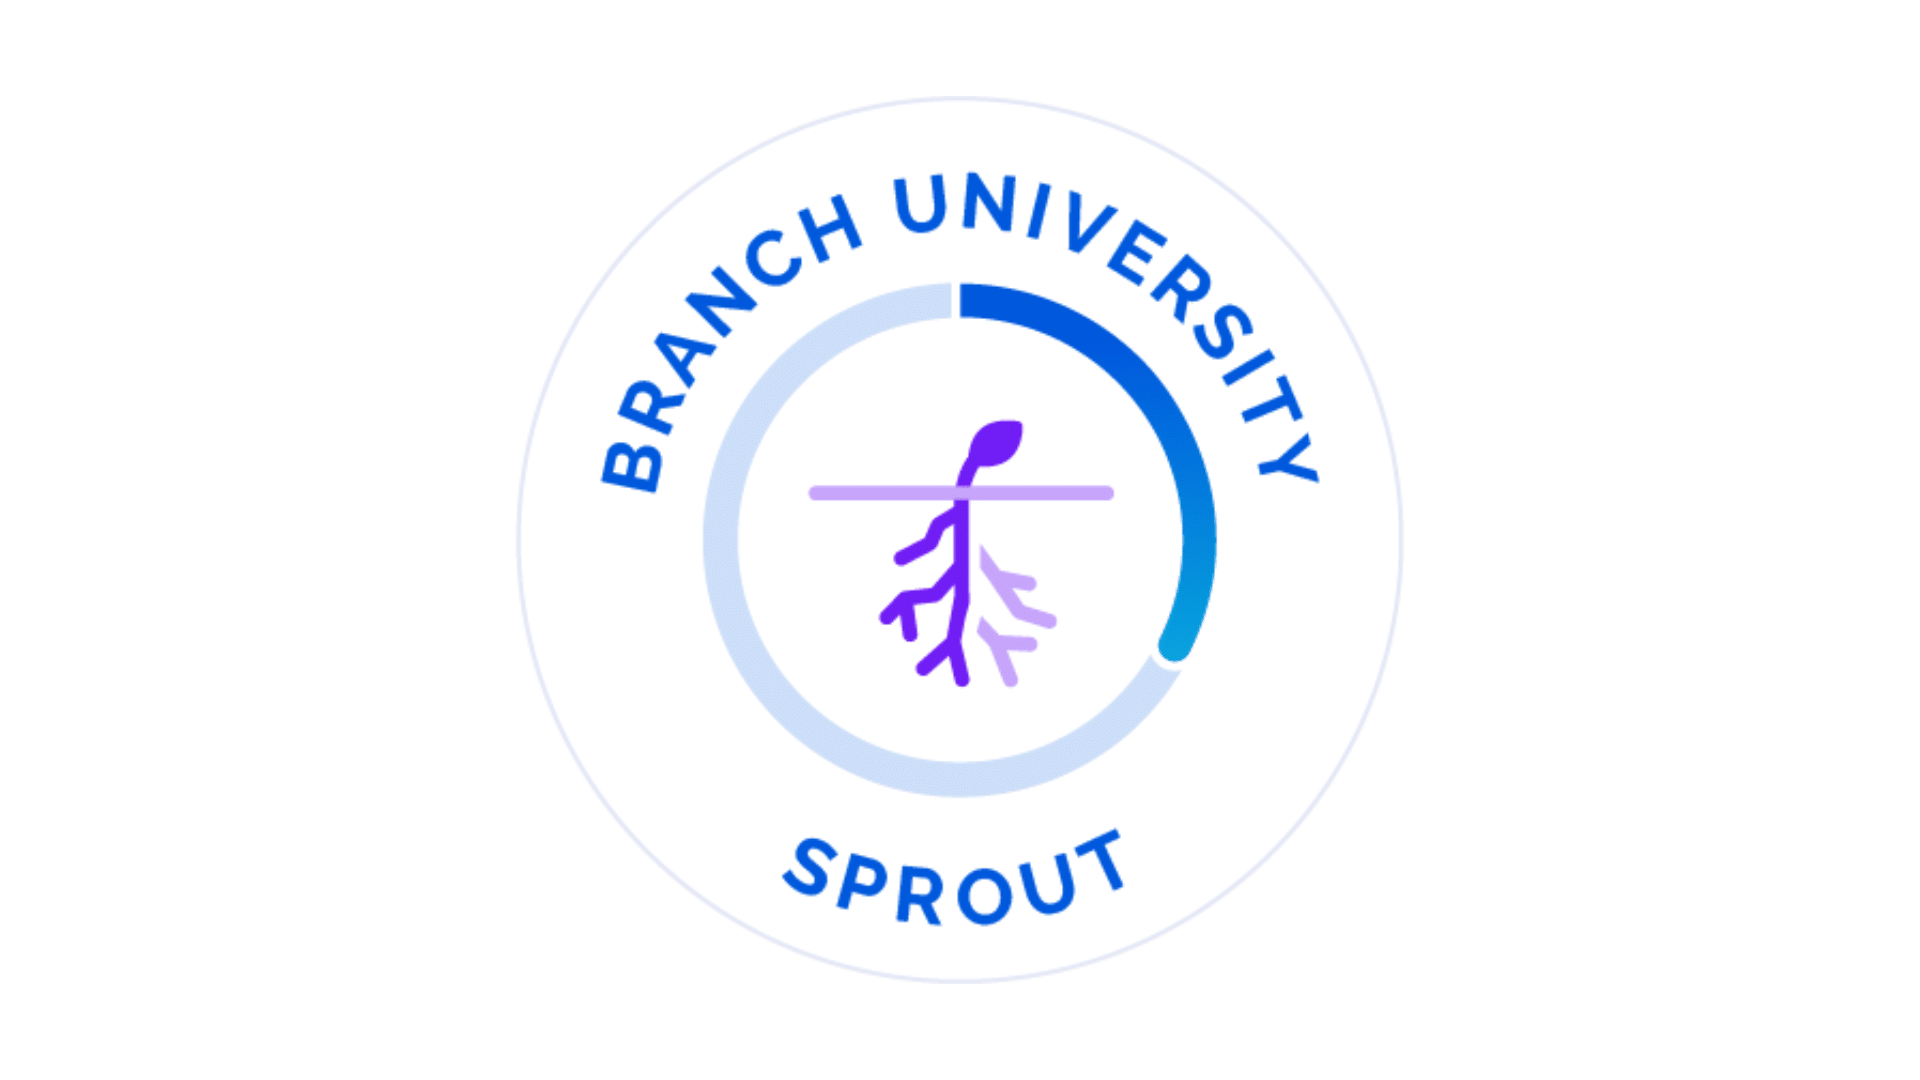 Branch University certification icon.